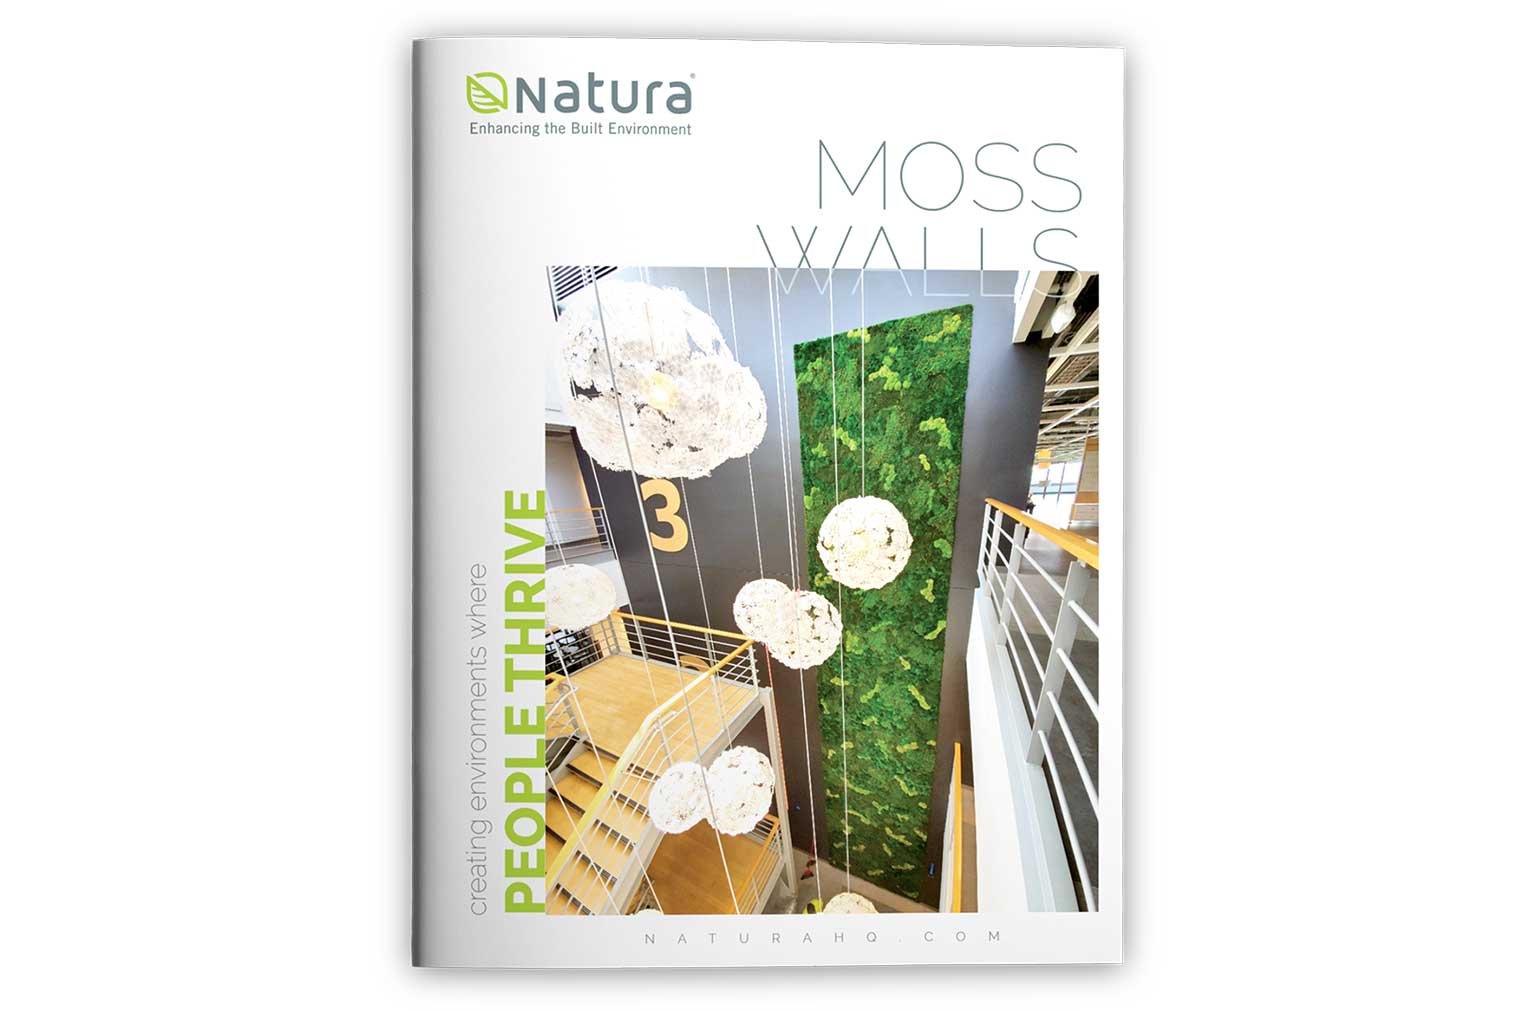 Natura-Moss-Wall-Cover